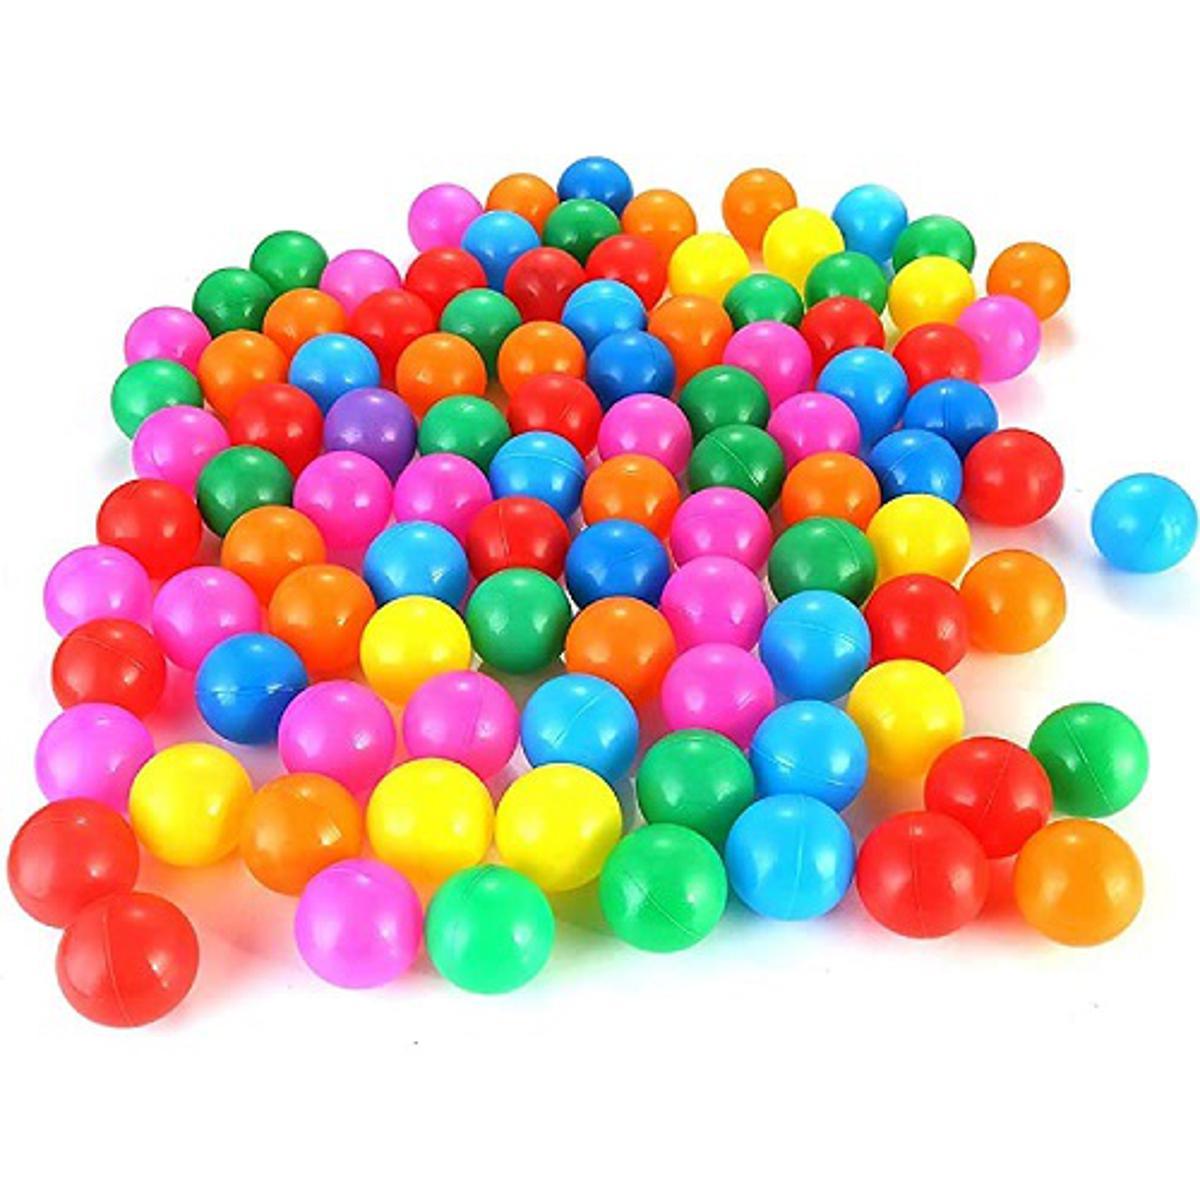 Colorful 24 Pcs Soft Plastic Balls (Multicolor)